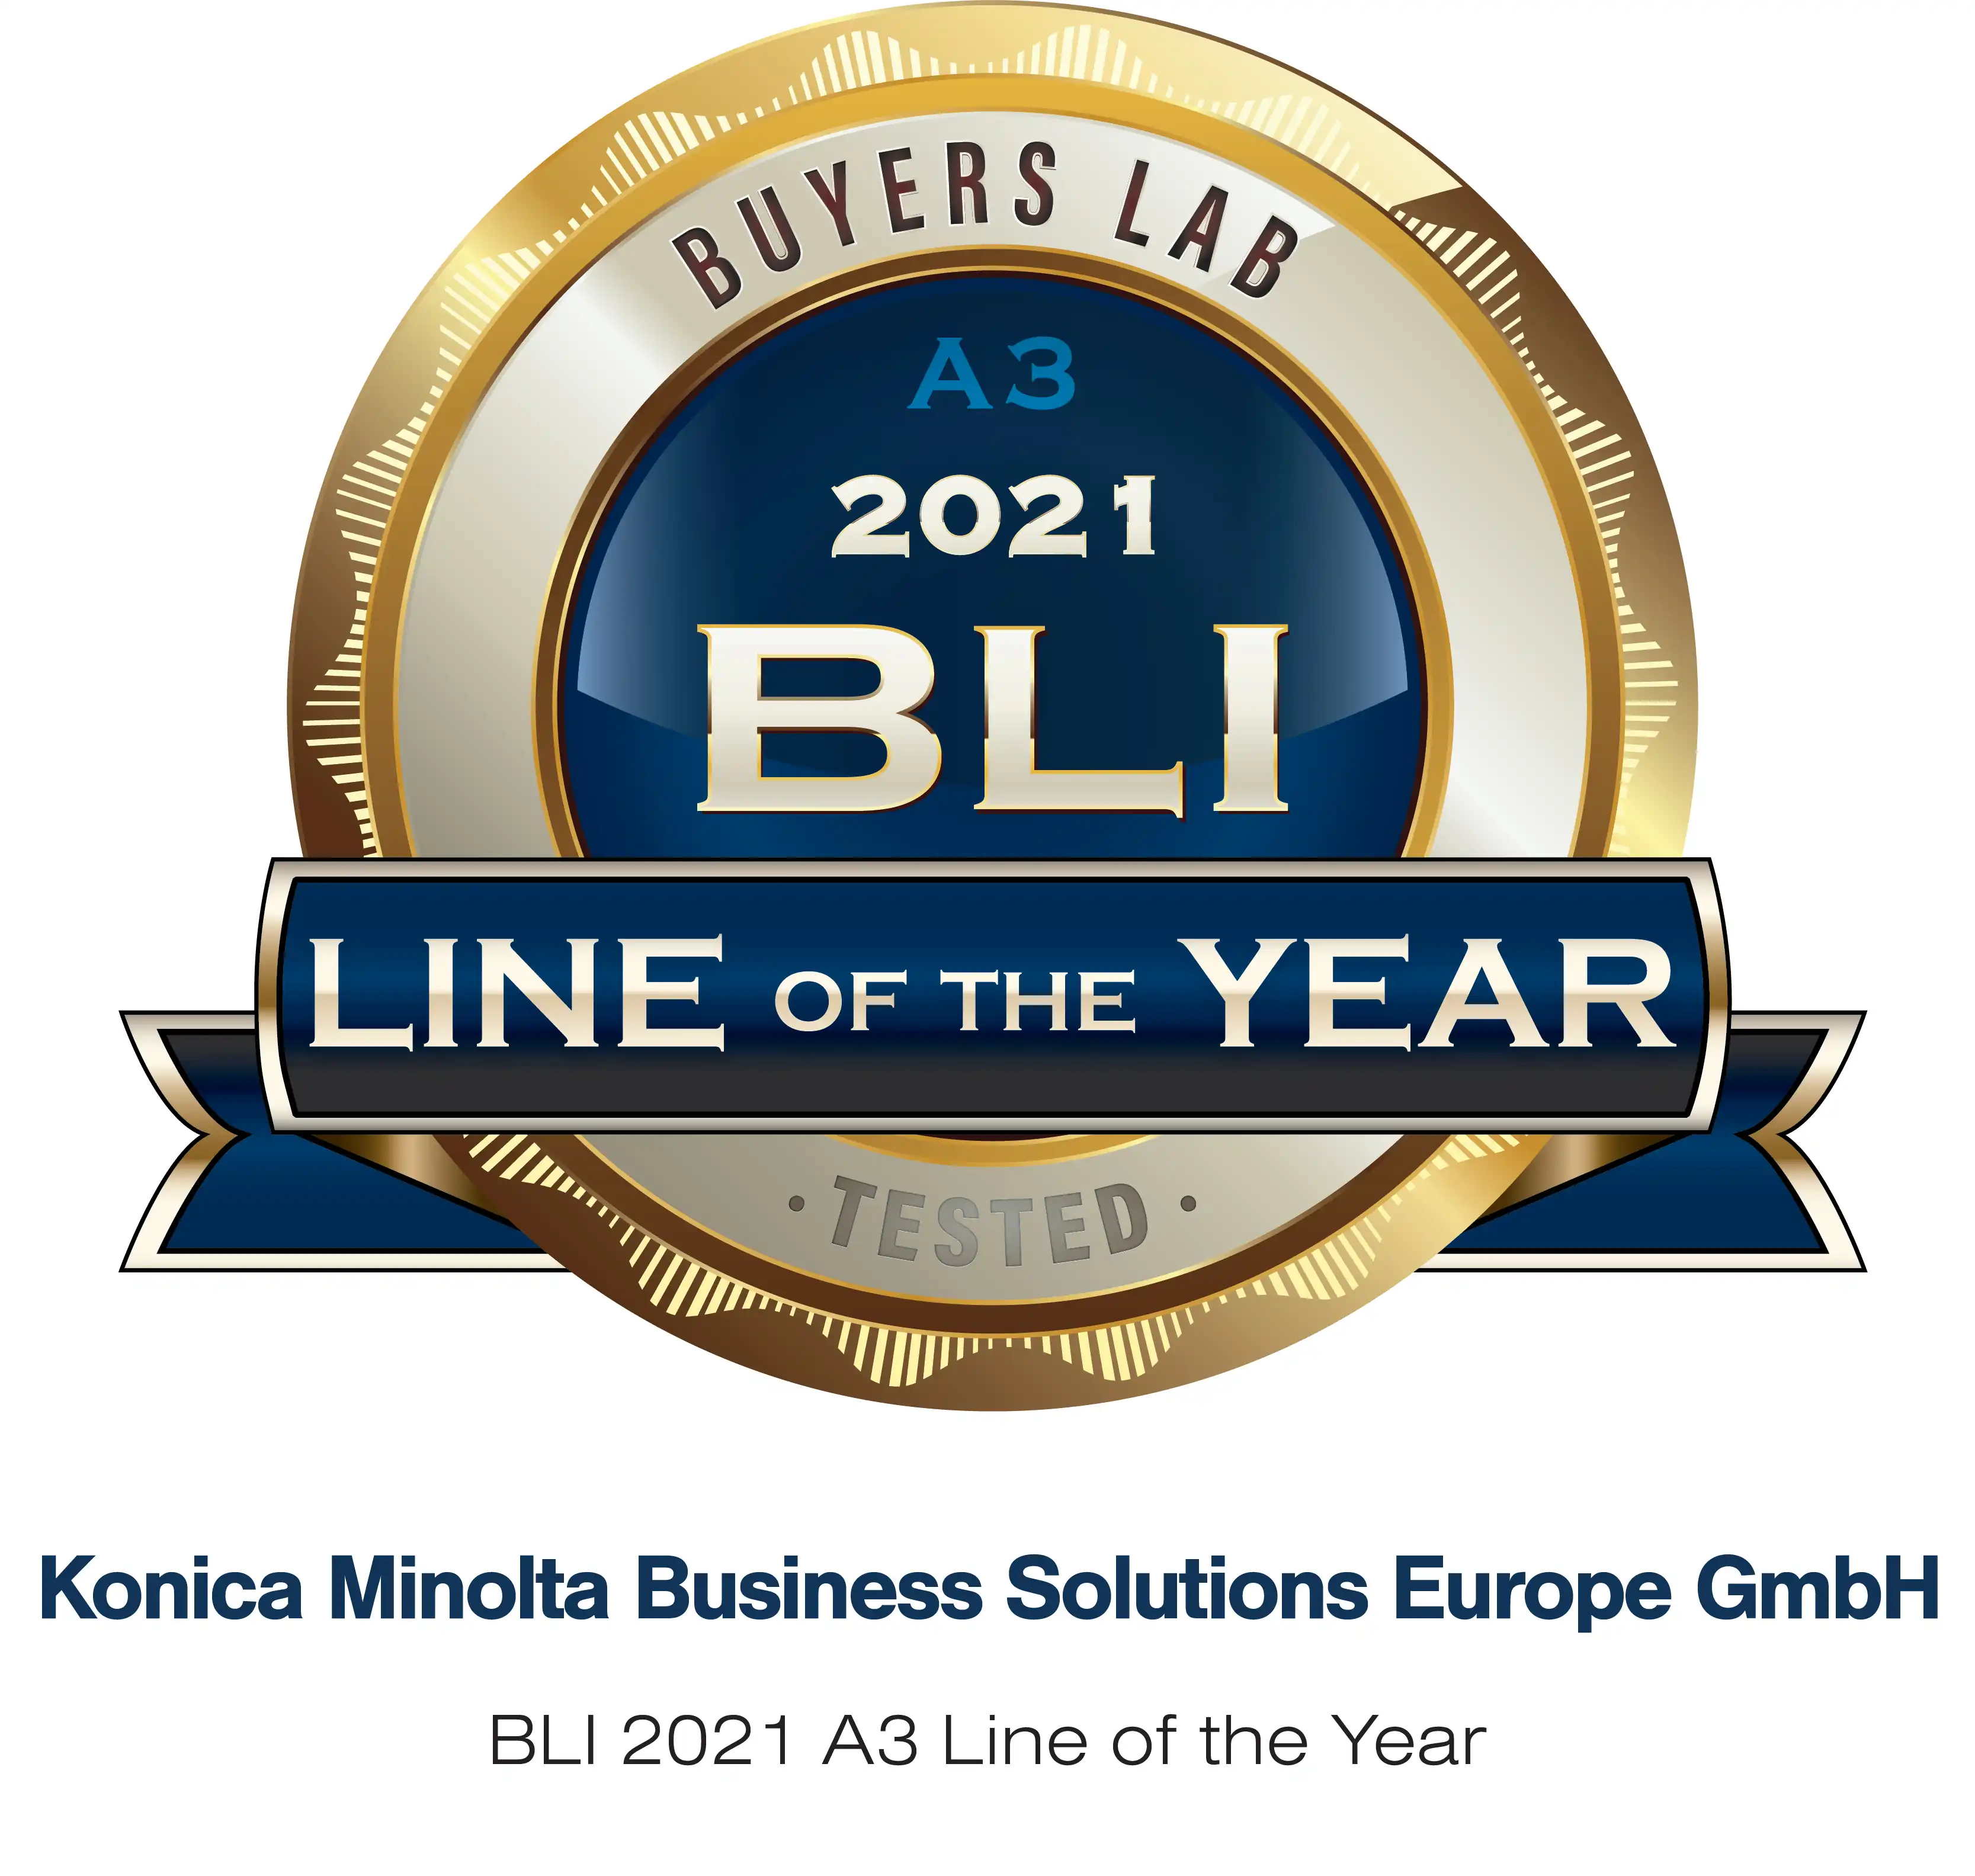  BLI 2021 A3 Line of the Year Award